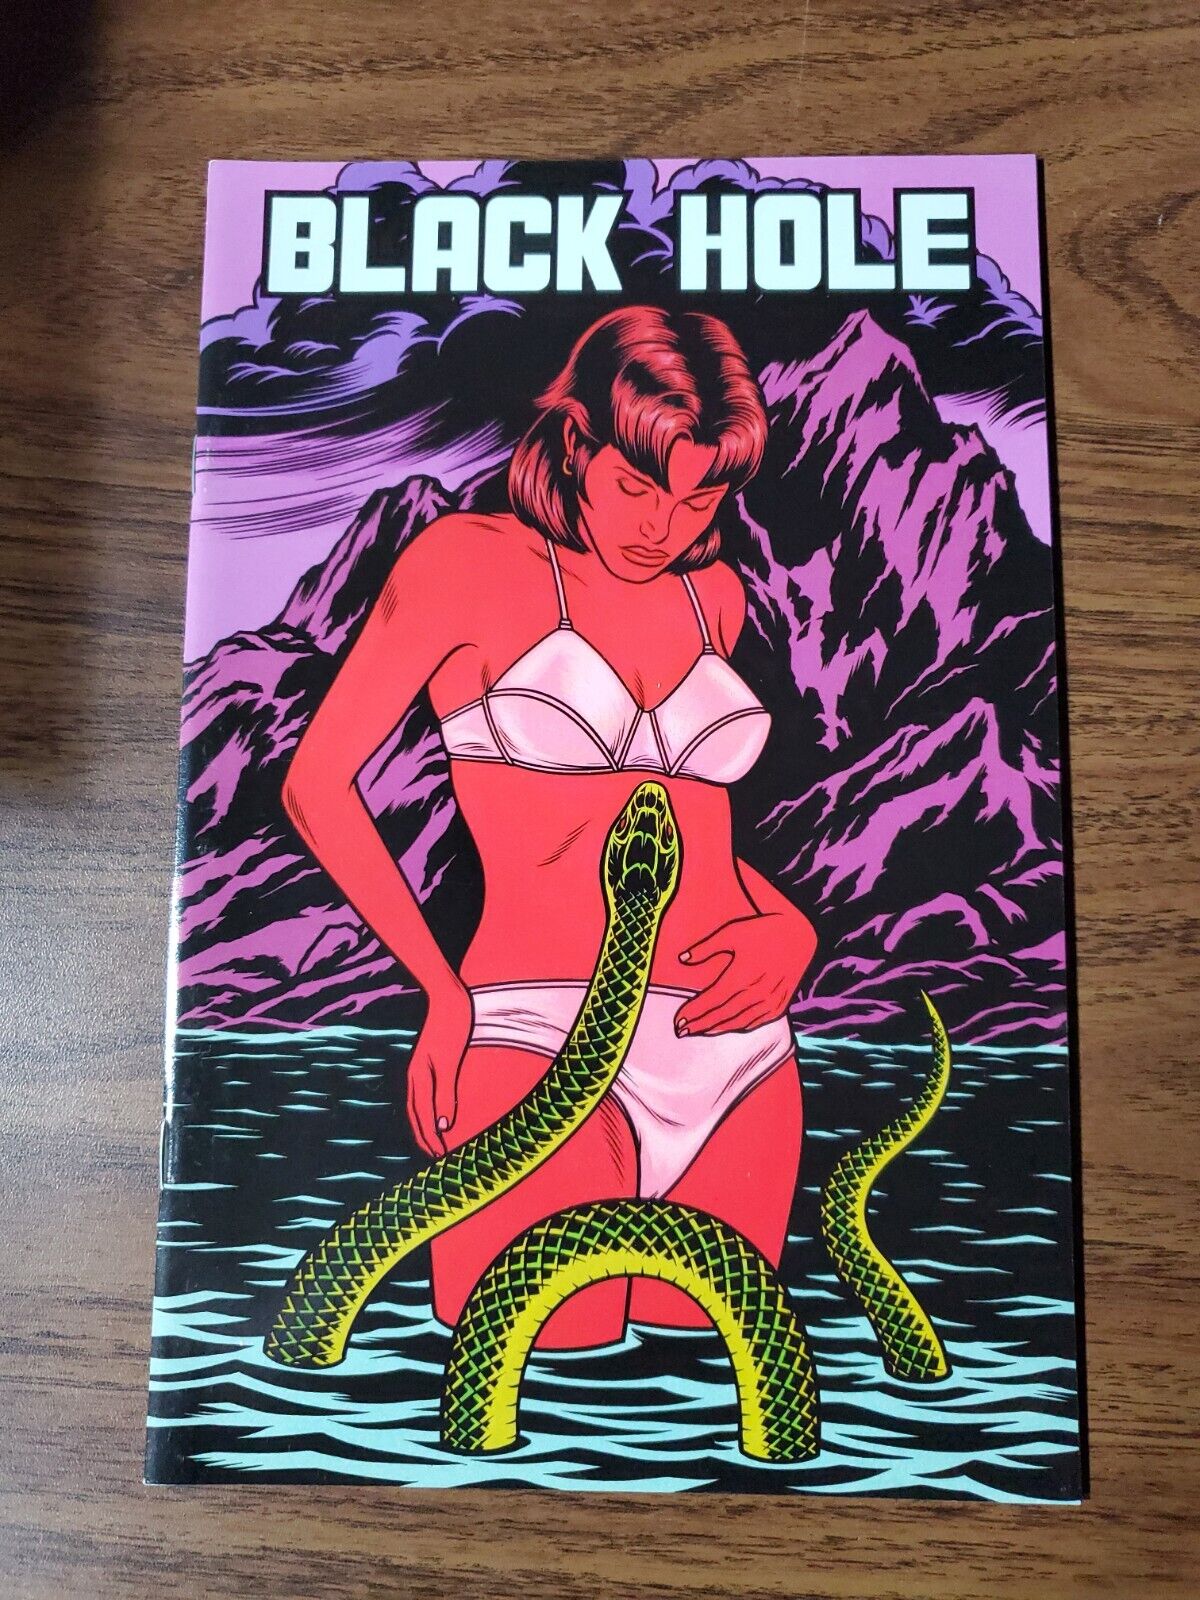 BLACK HOLE #7 by Charles Burns | 2000 Fantagraphics | VF/NM | 1st Print Horror 